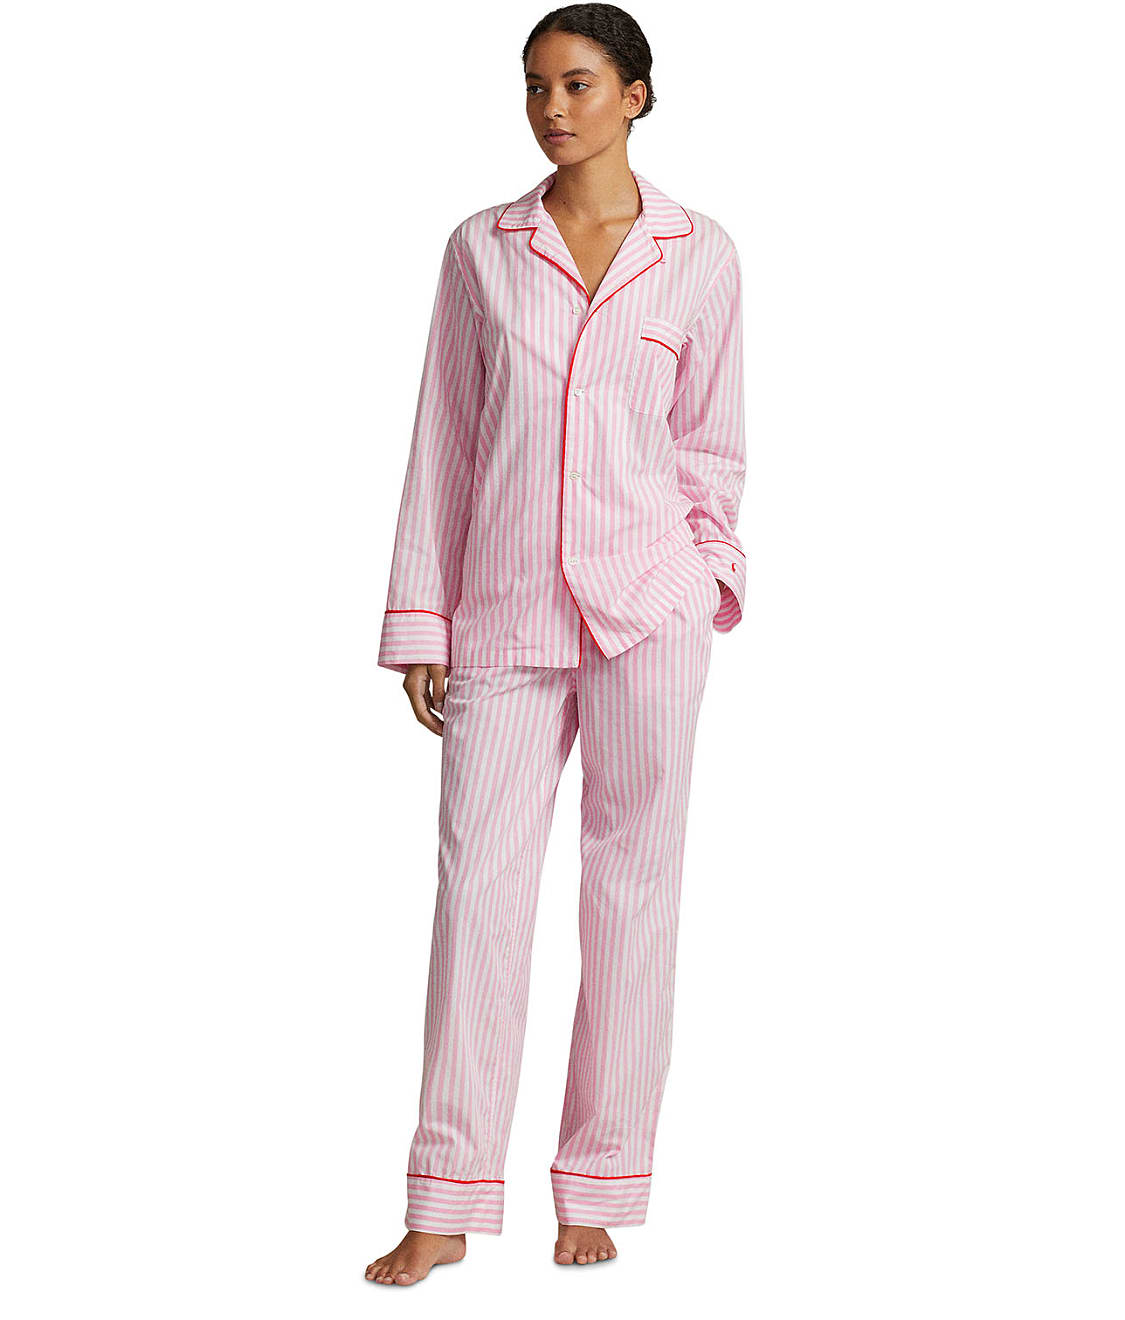 The Madison Woven Pajama Set